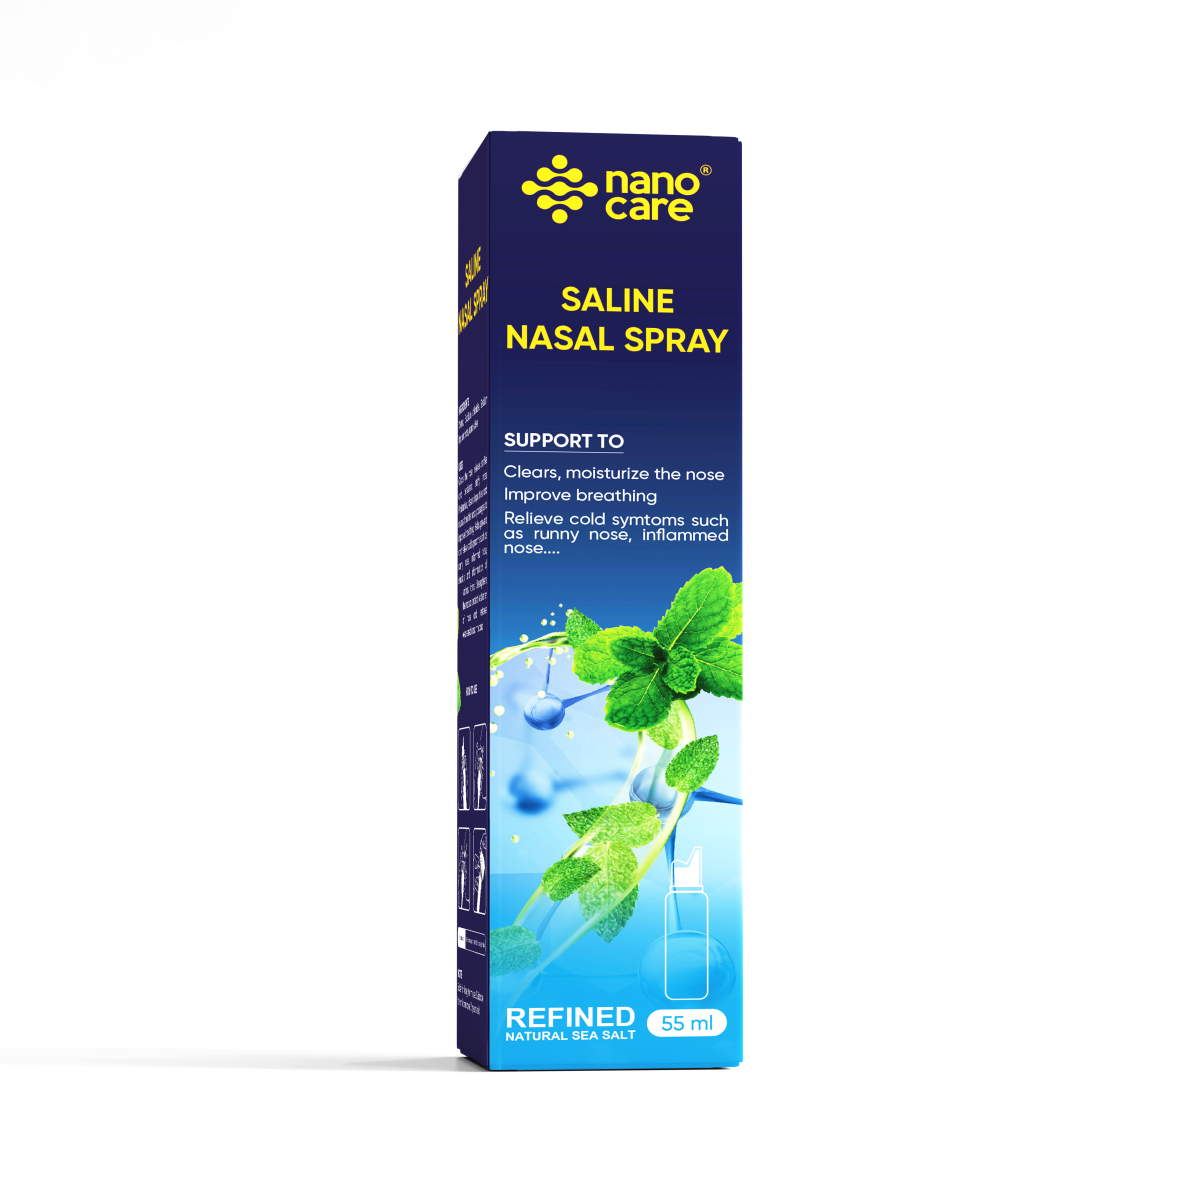 Saline Nasal Spray 55ml